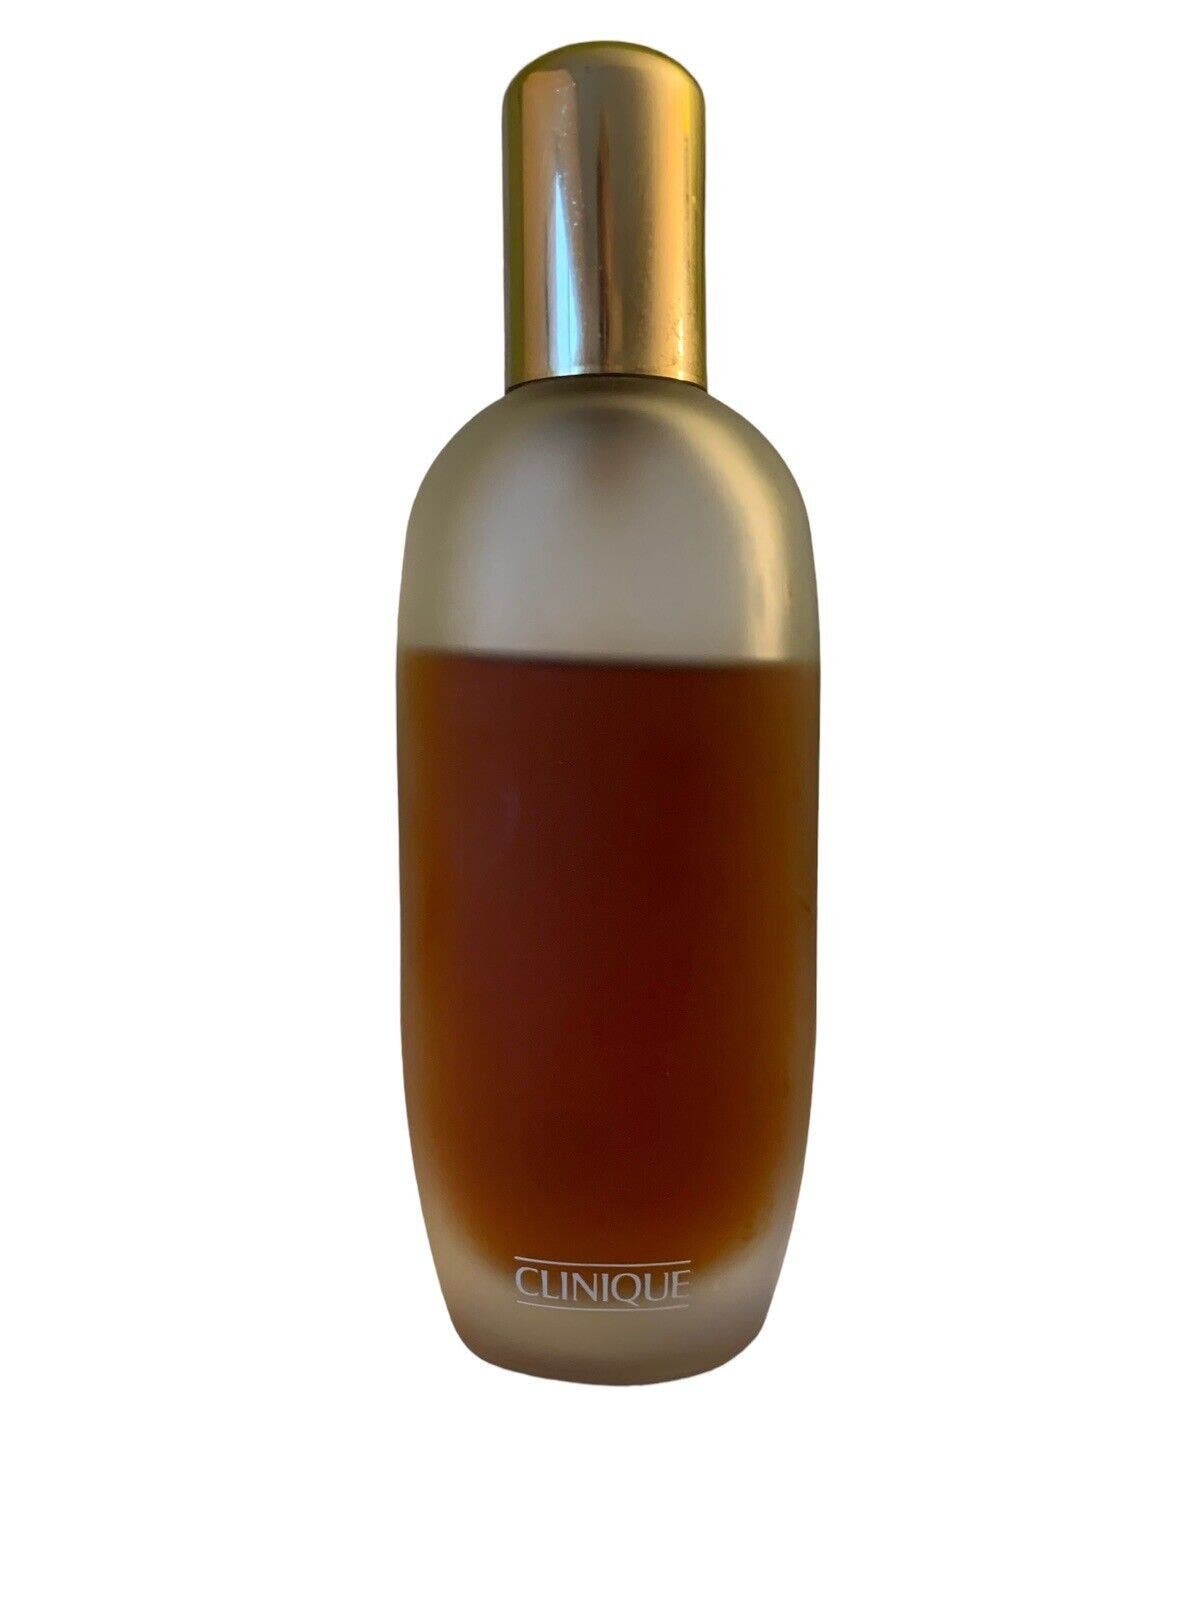 Primary image for CLINIQUE AROMATICS ELIXIR Perfume Parfum Spray 3.4 oz Vintage Classic New Rare